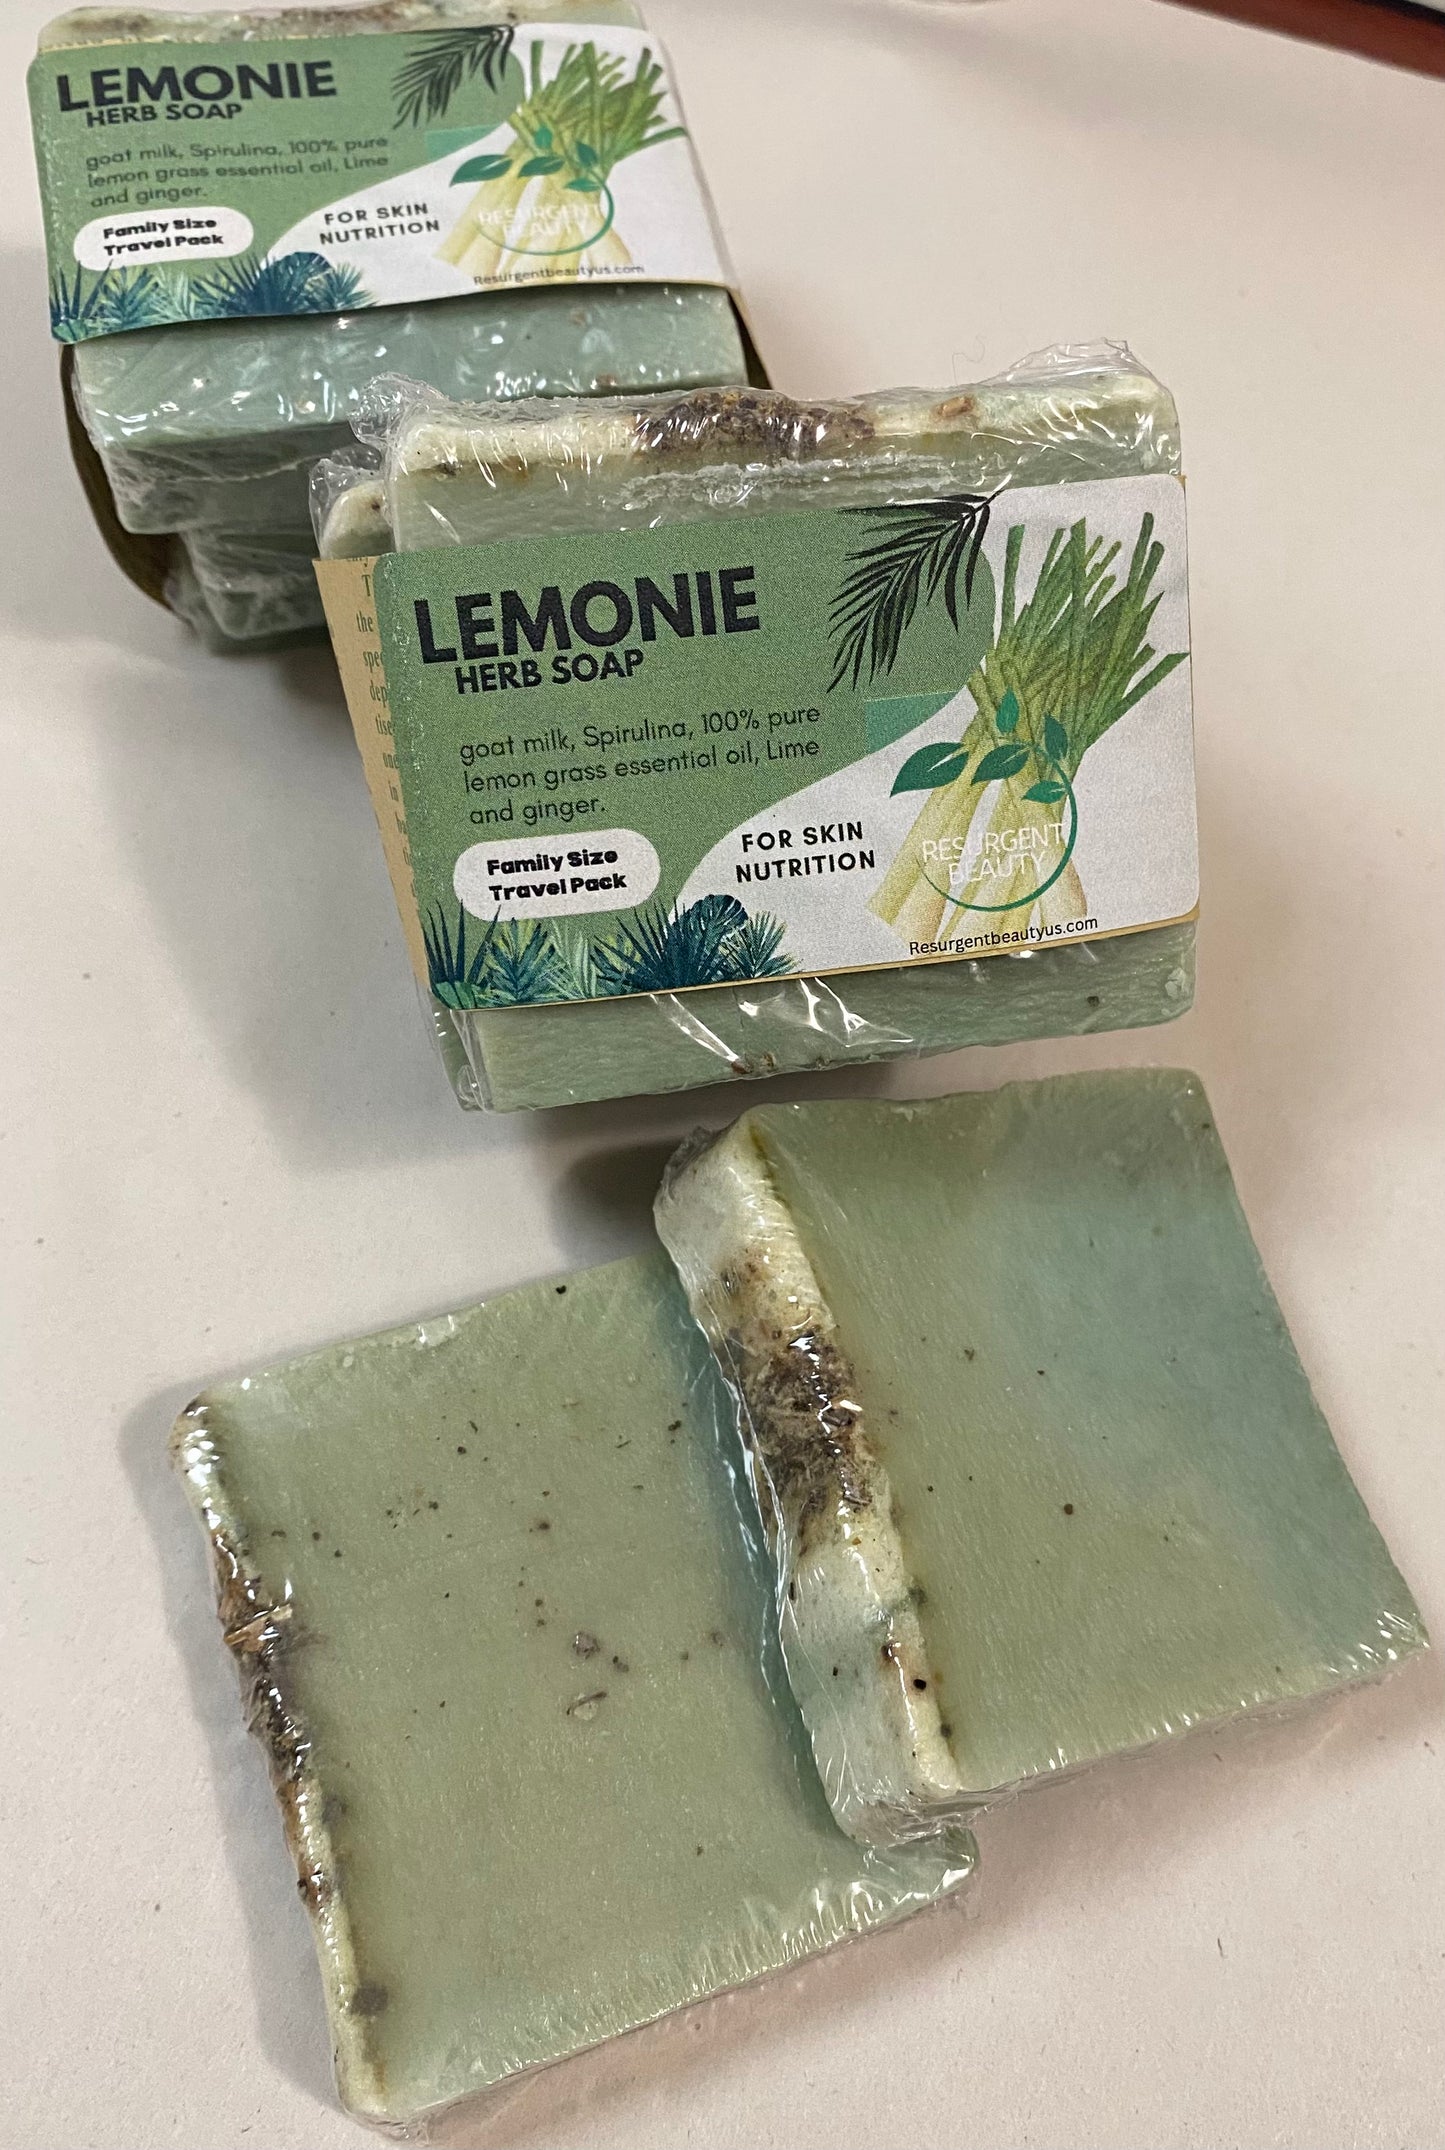 Lemonie Herb Soap- For Skin Nutrition